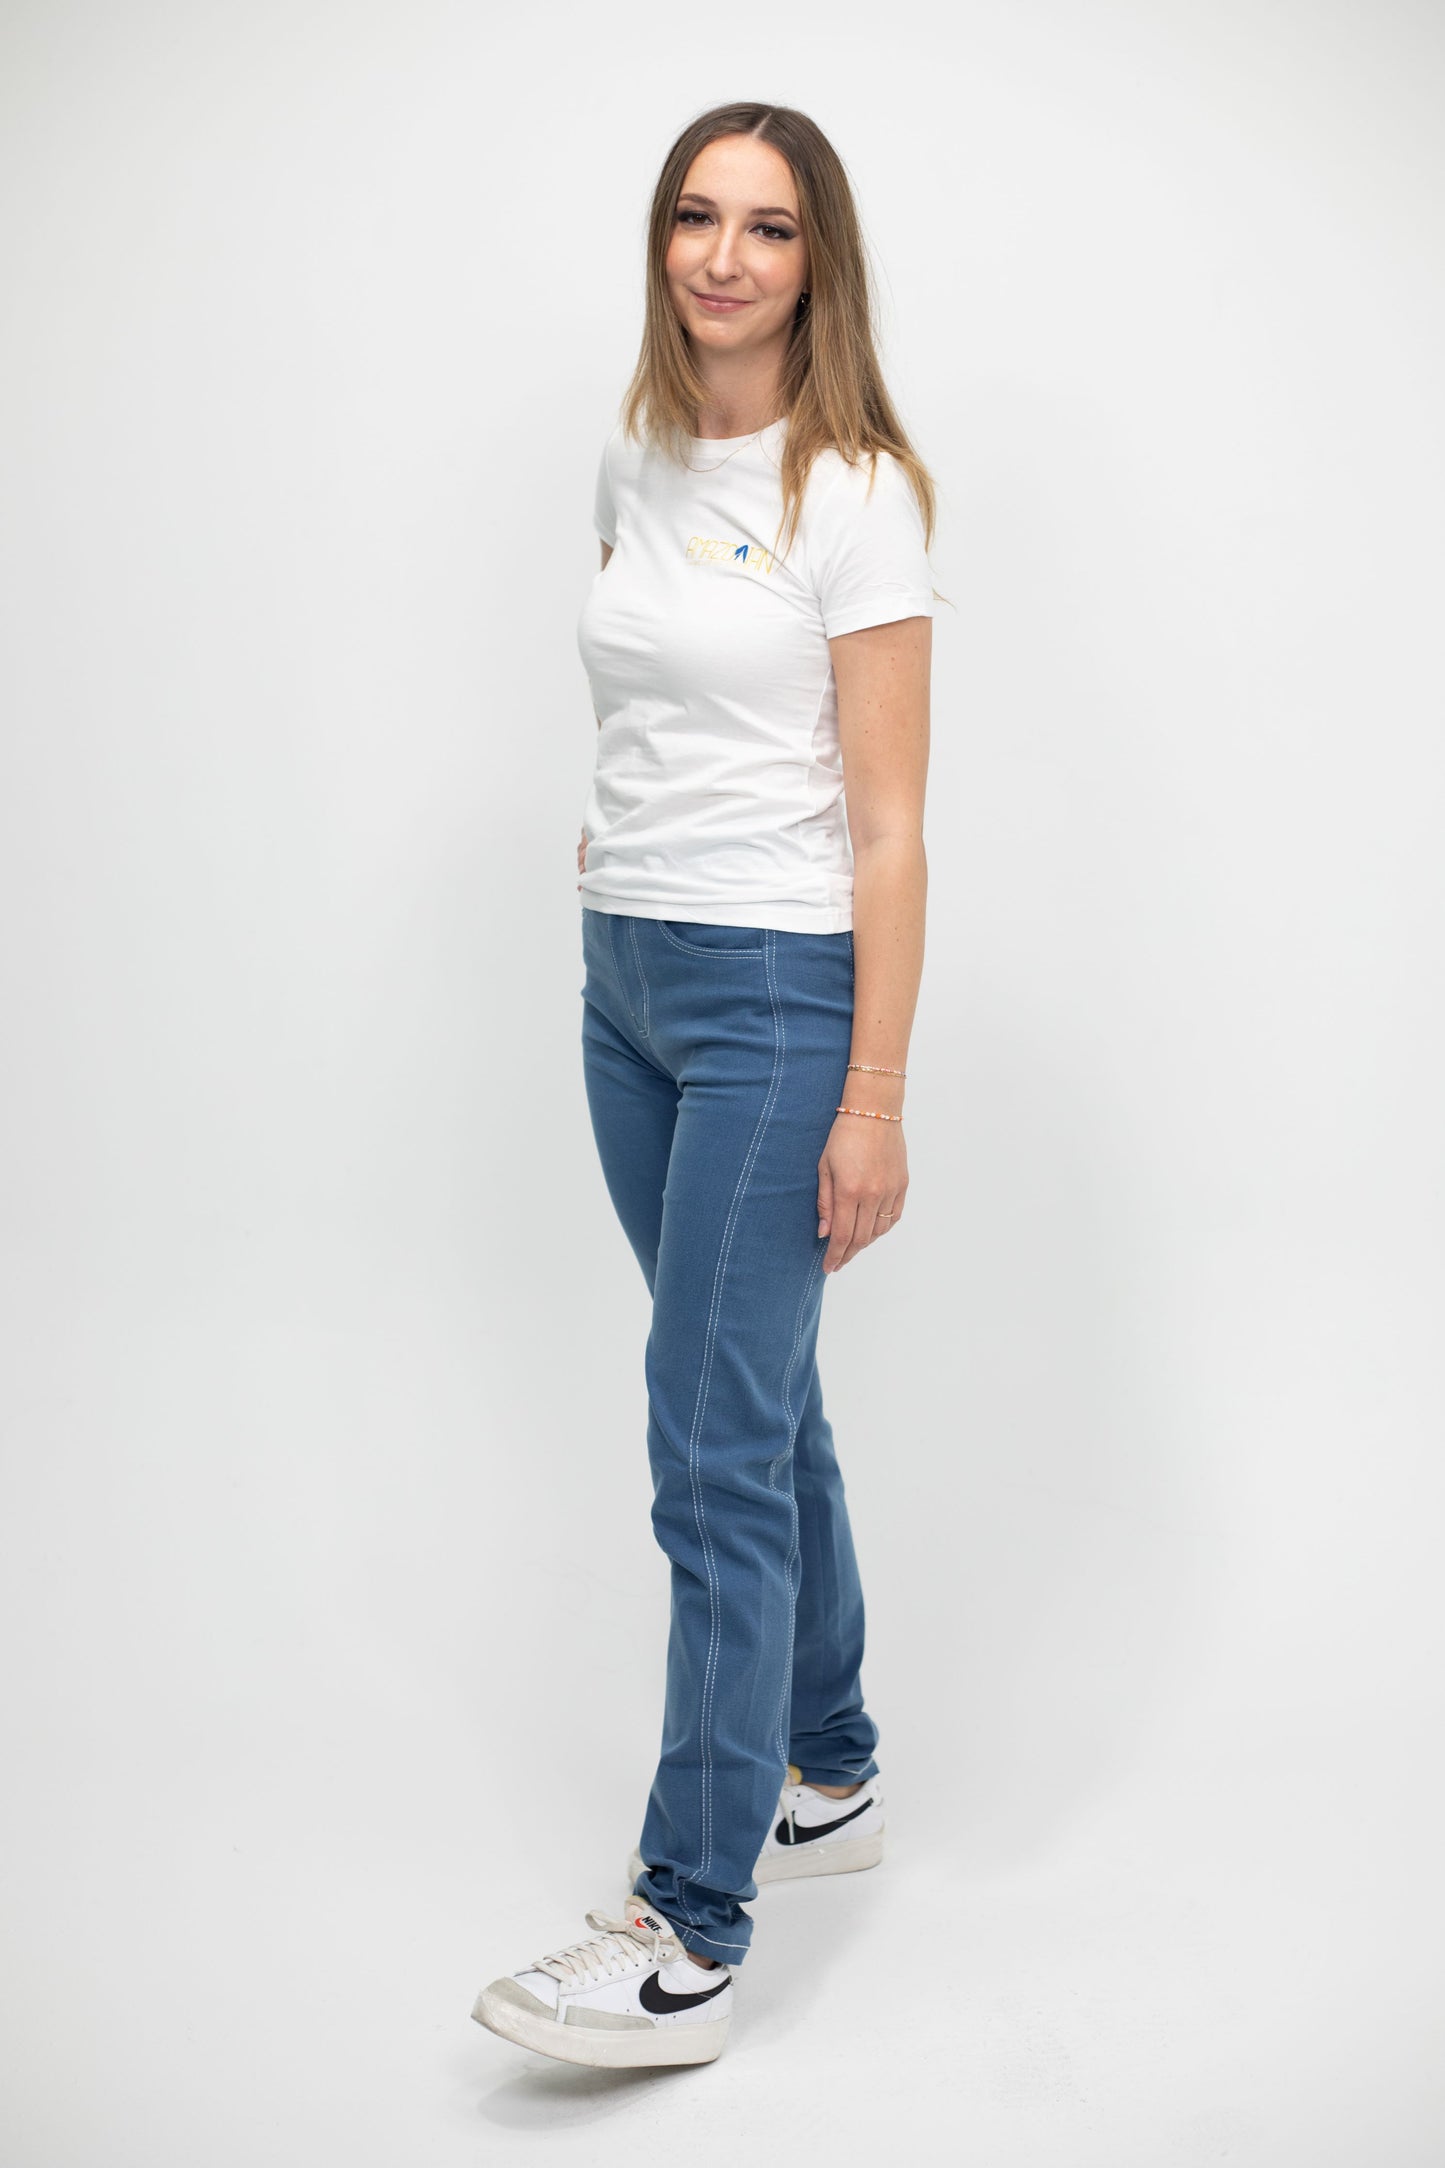 High waisted jeans - Medium Blue - 37 inch inseam